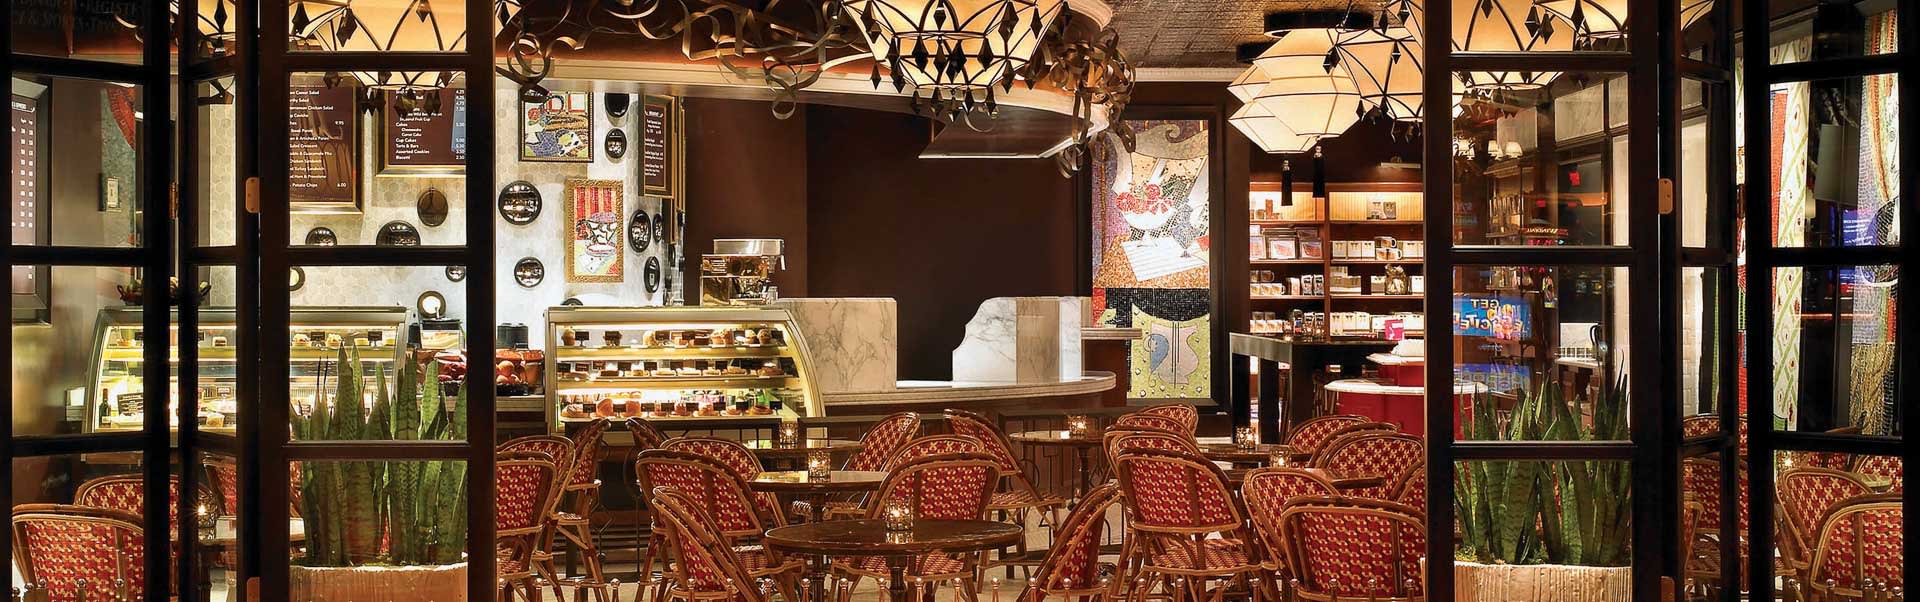 The Café | Wynn Las Vegas and Encore Resort